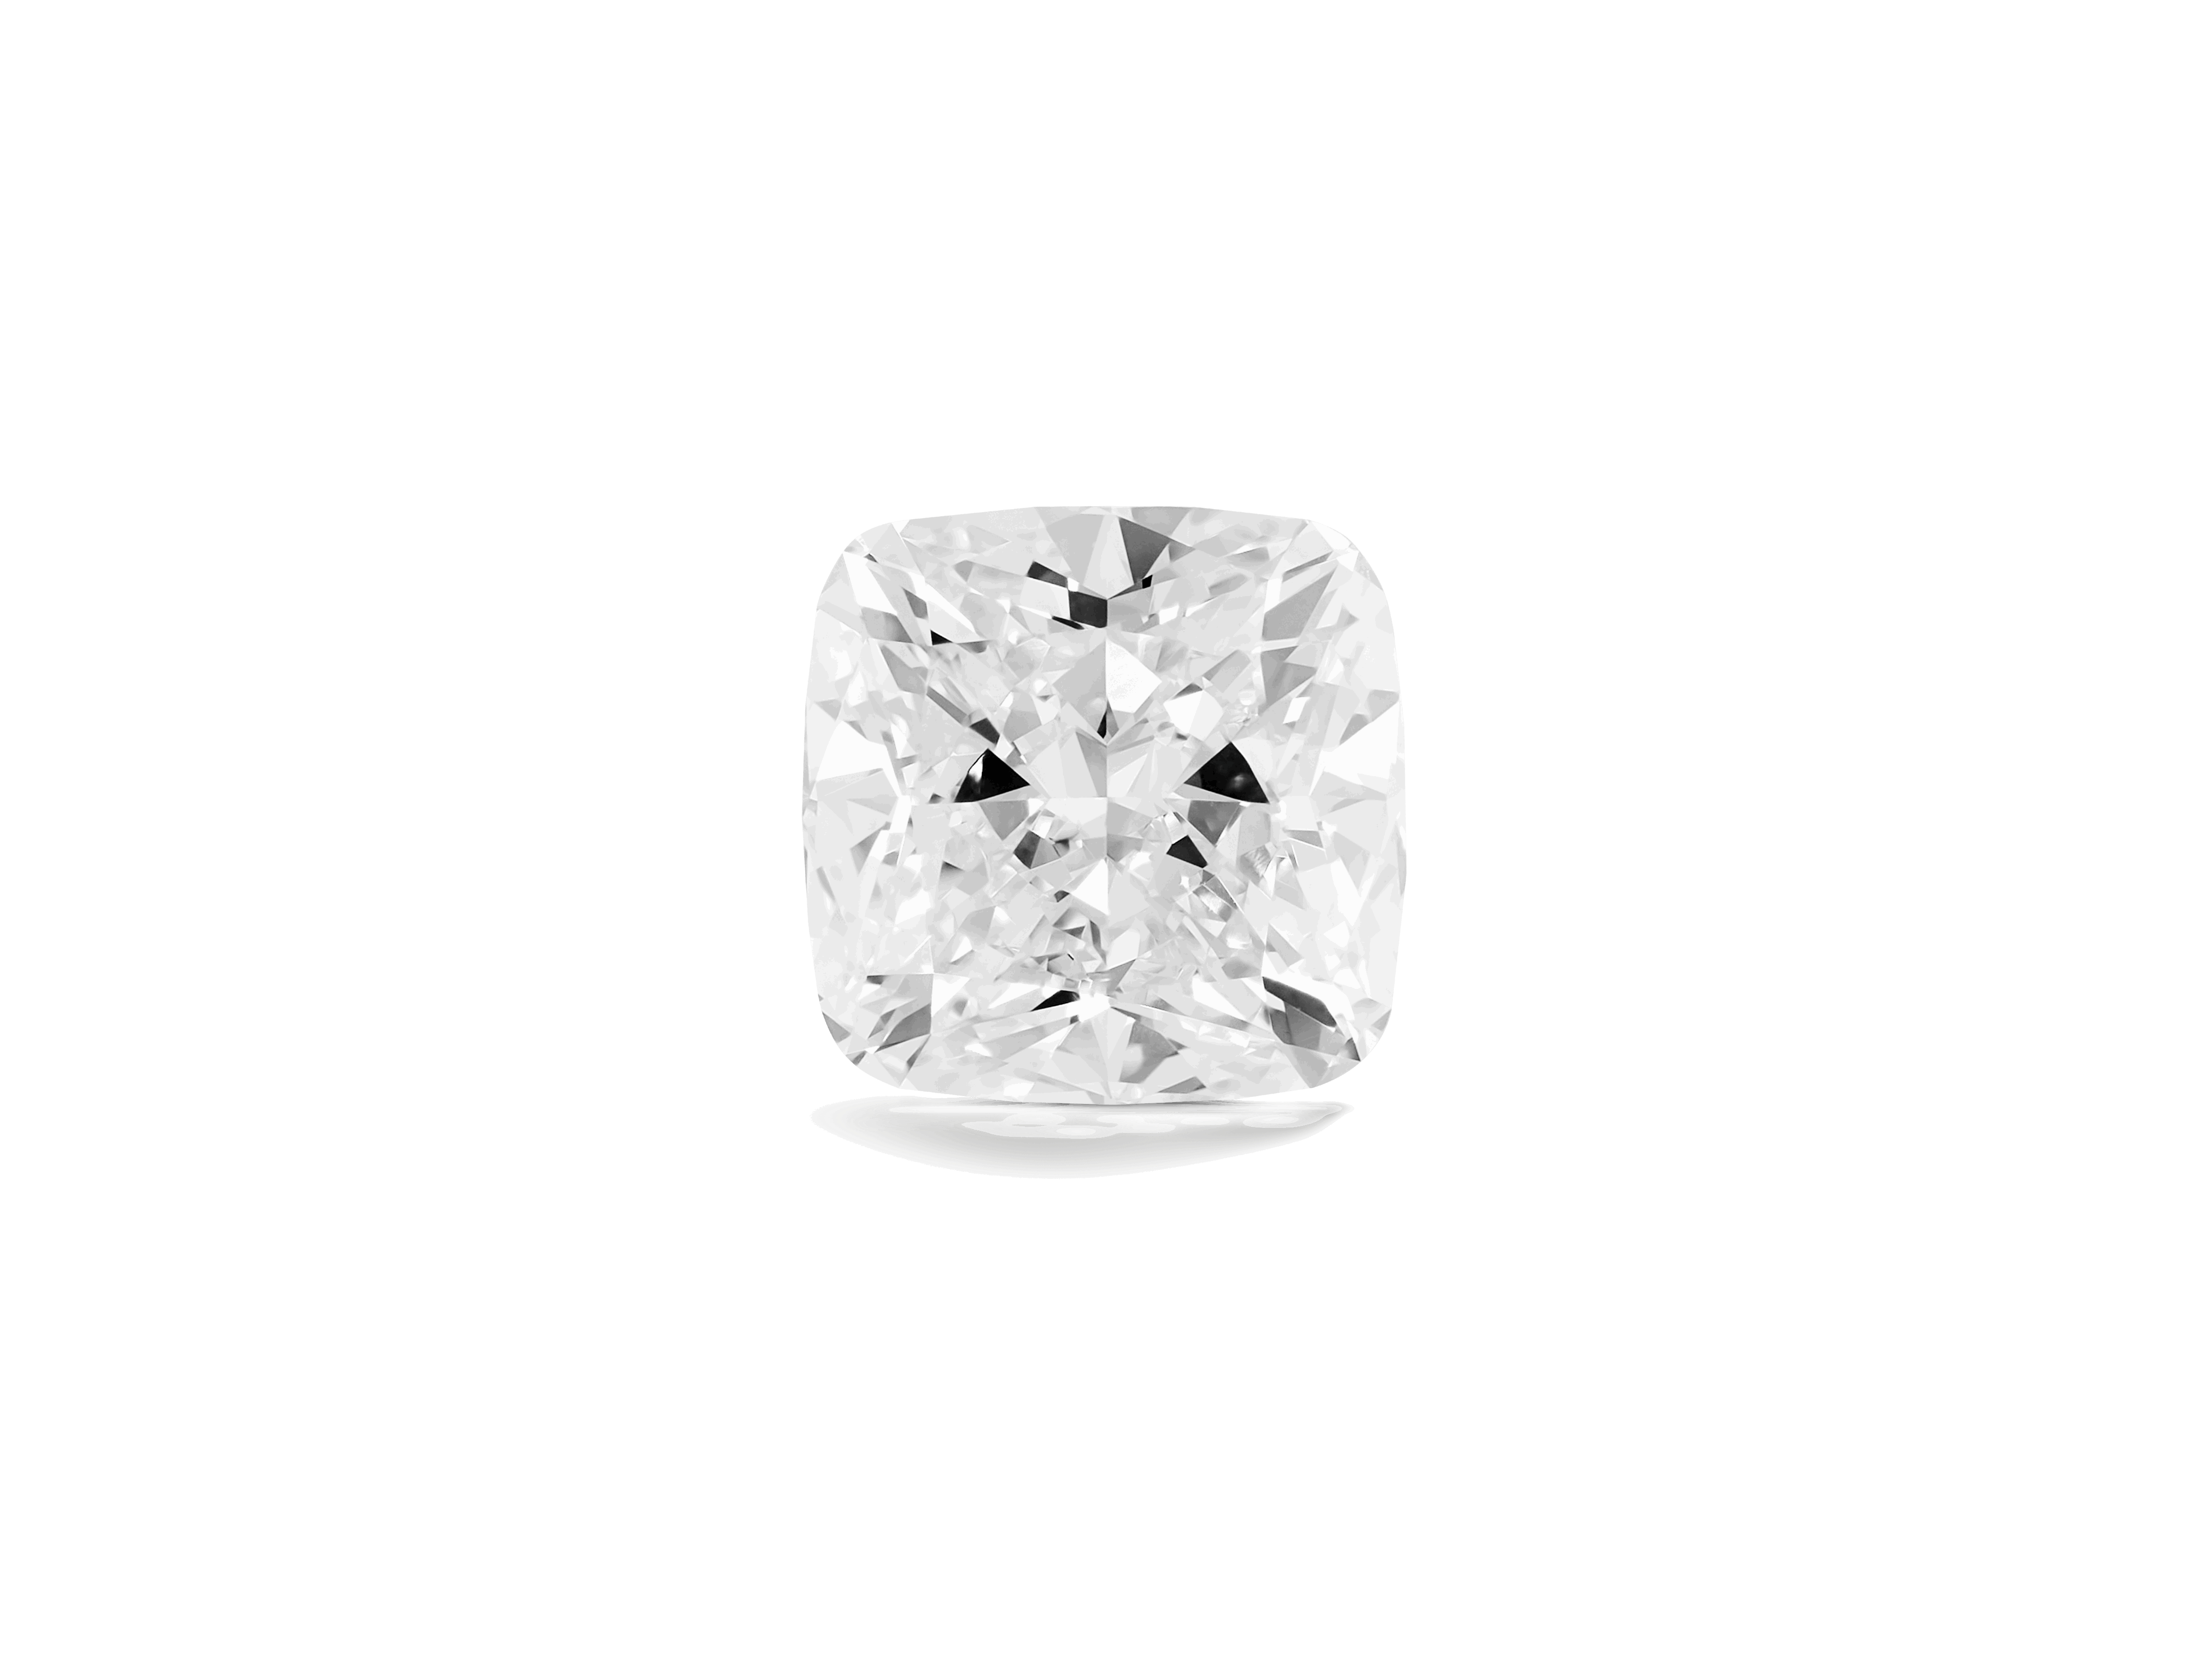 Overview of 3 carat cushion cut diamond